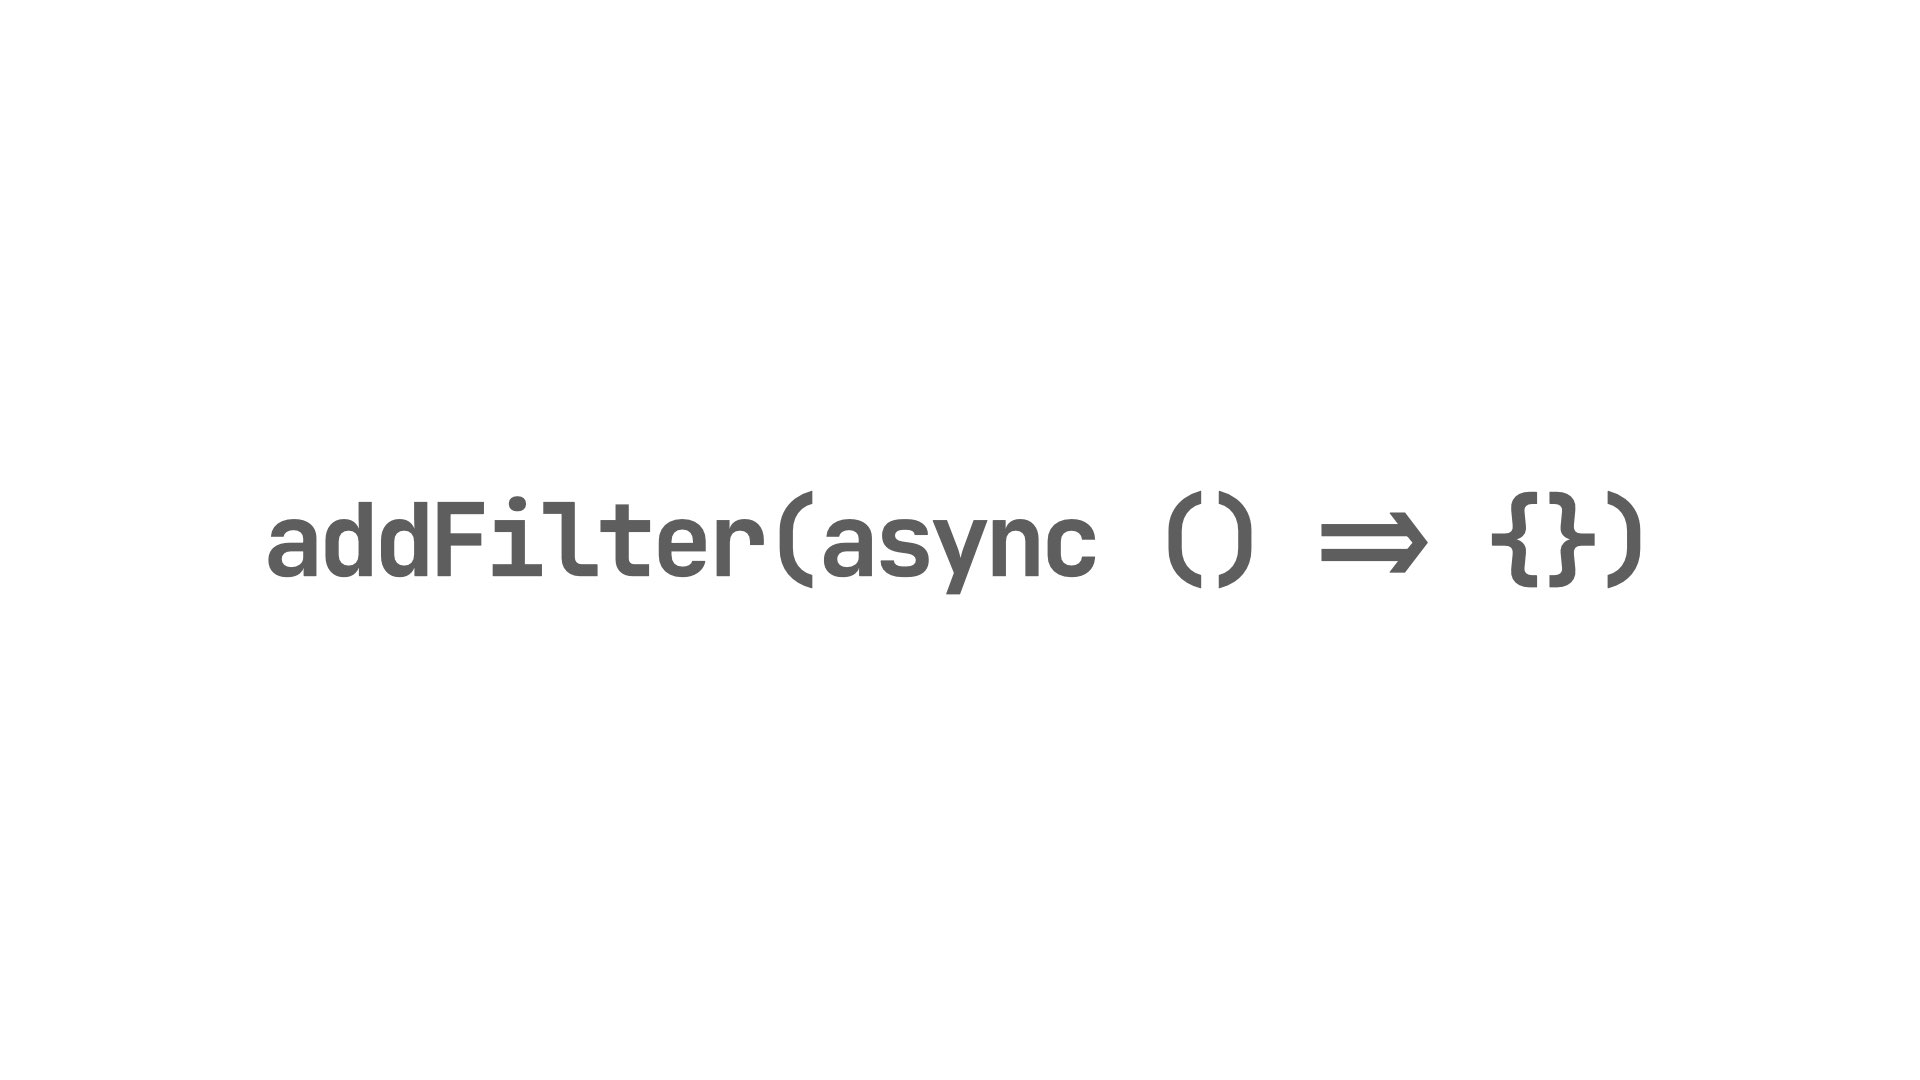 addFilter(async () => {});